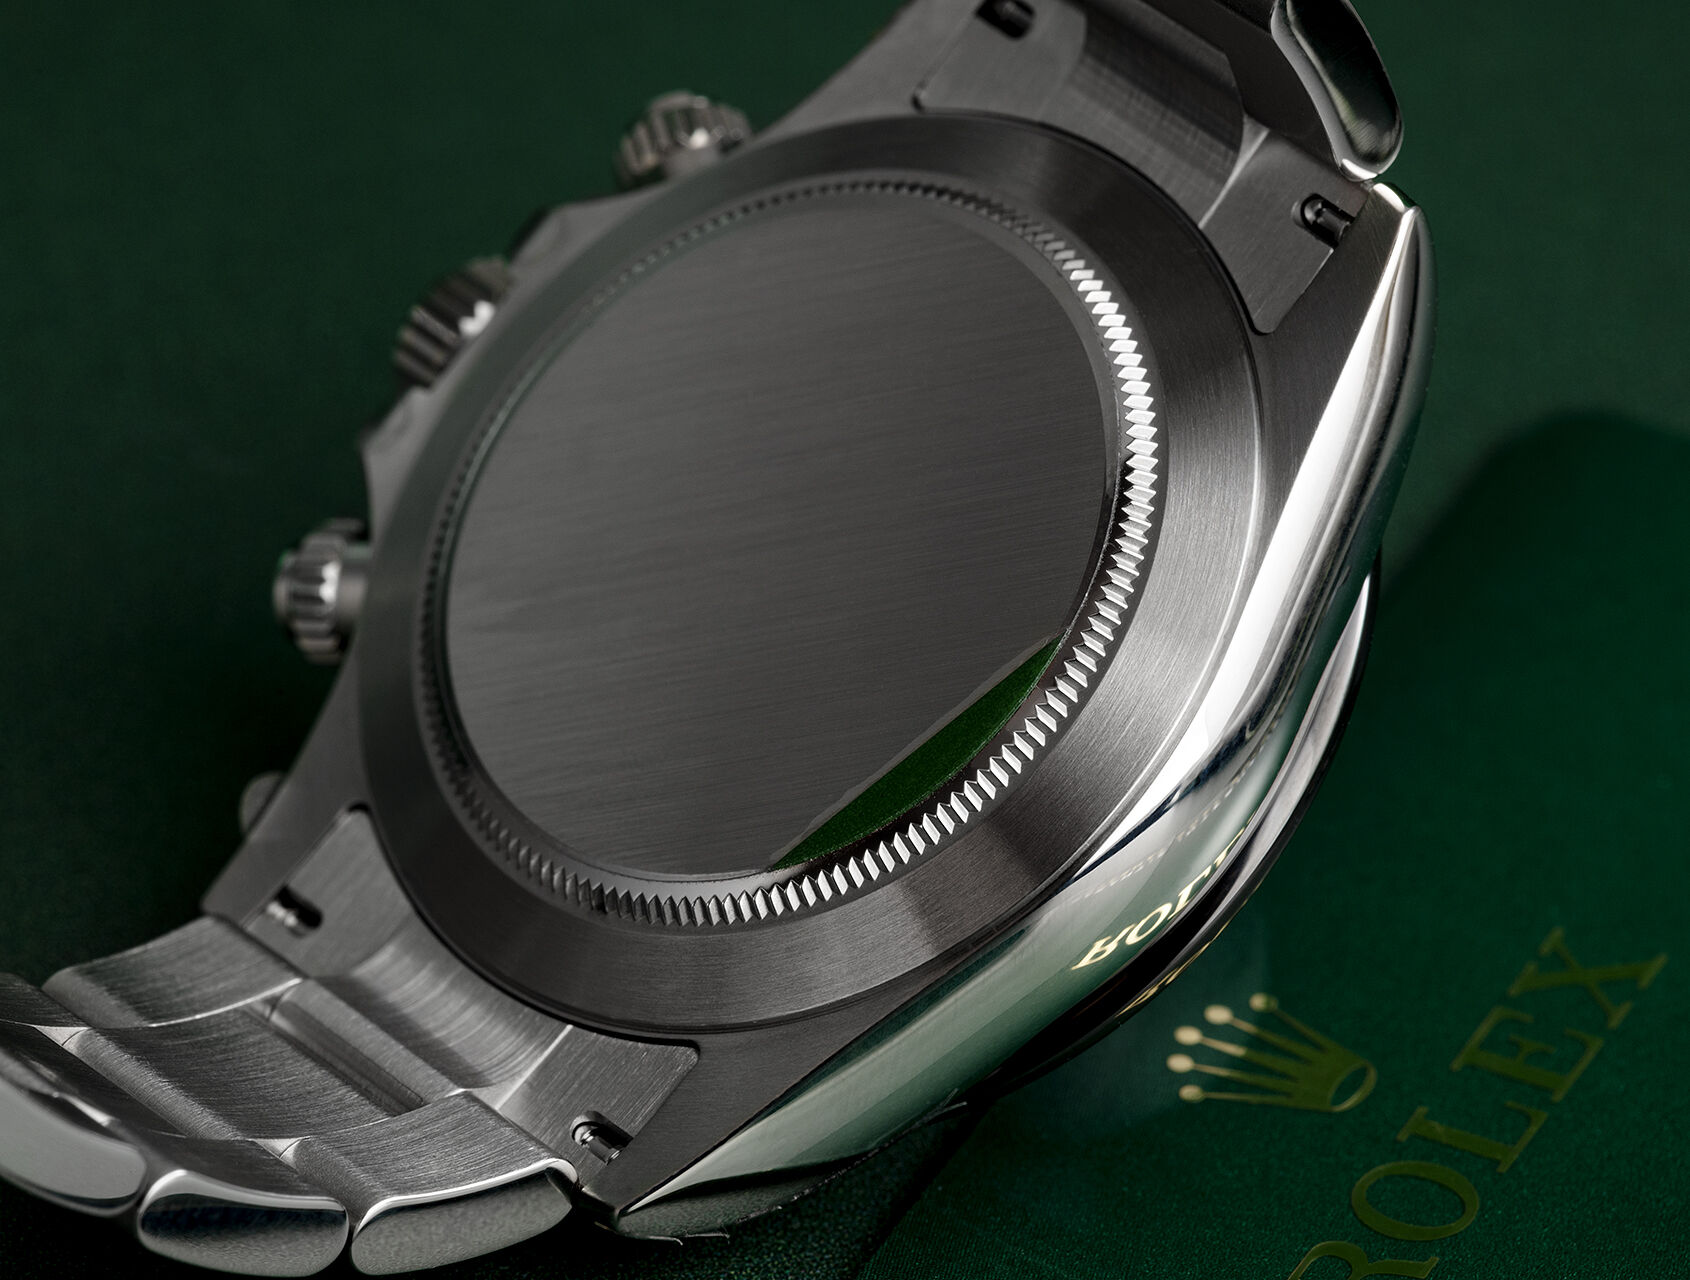 ref 116500LN | 116500LN - Brand New | Rolex Cosmograph Daytona